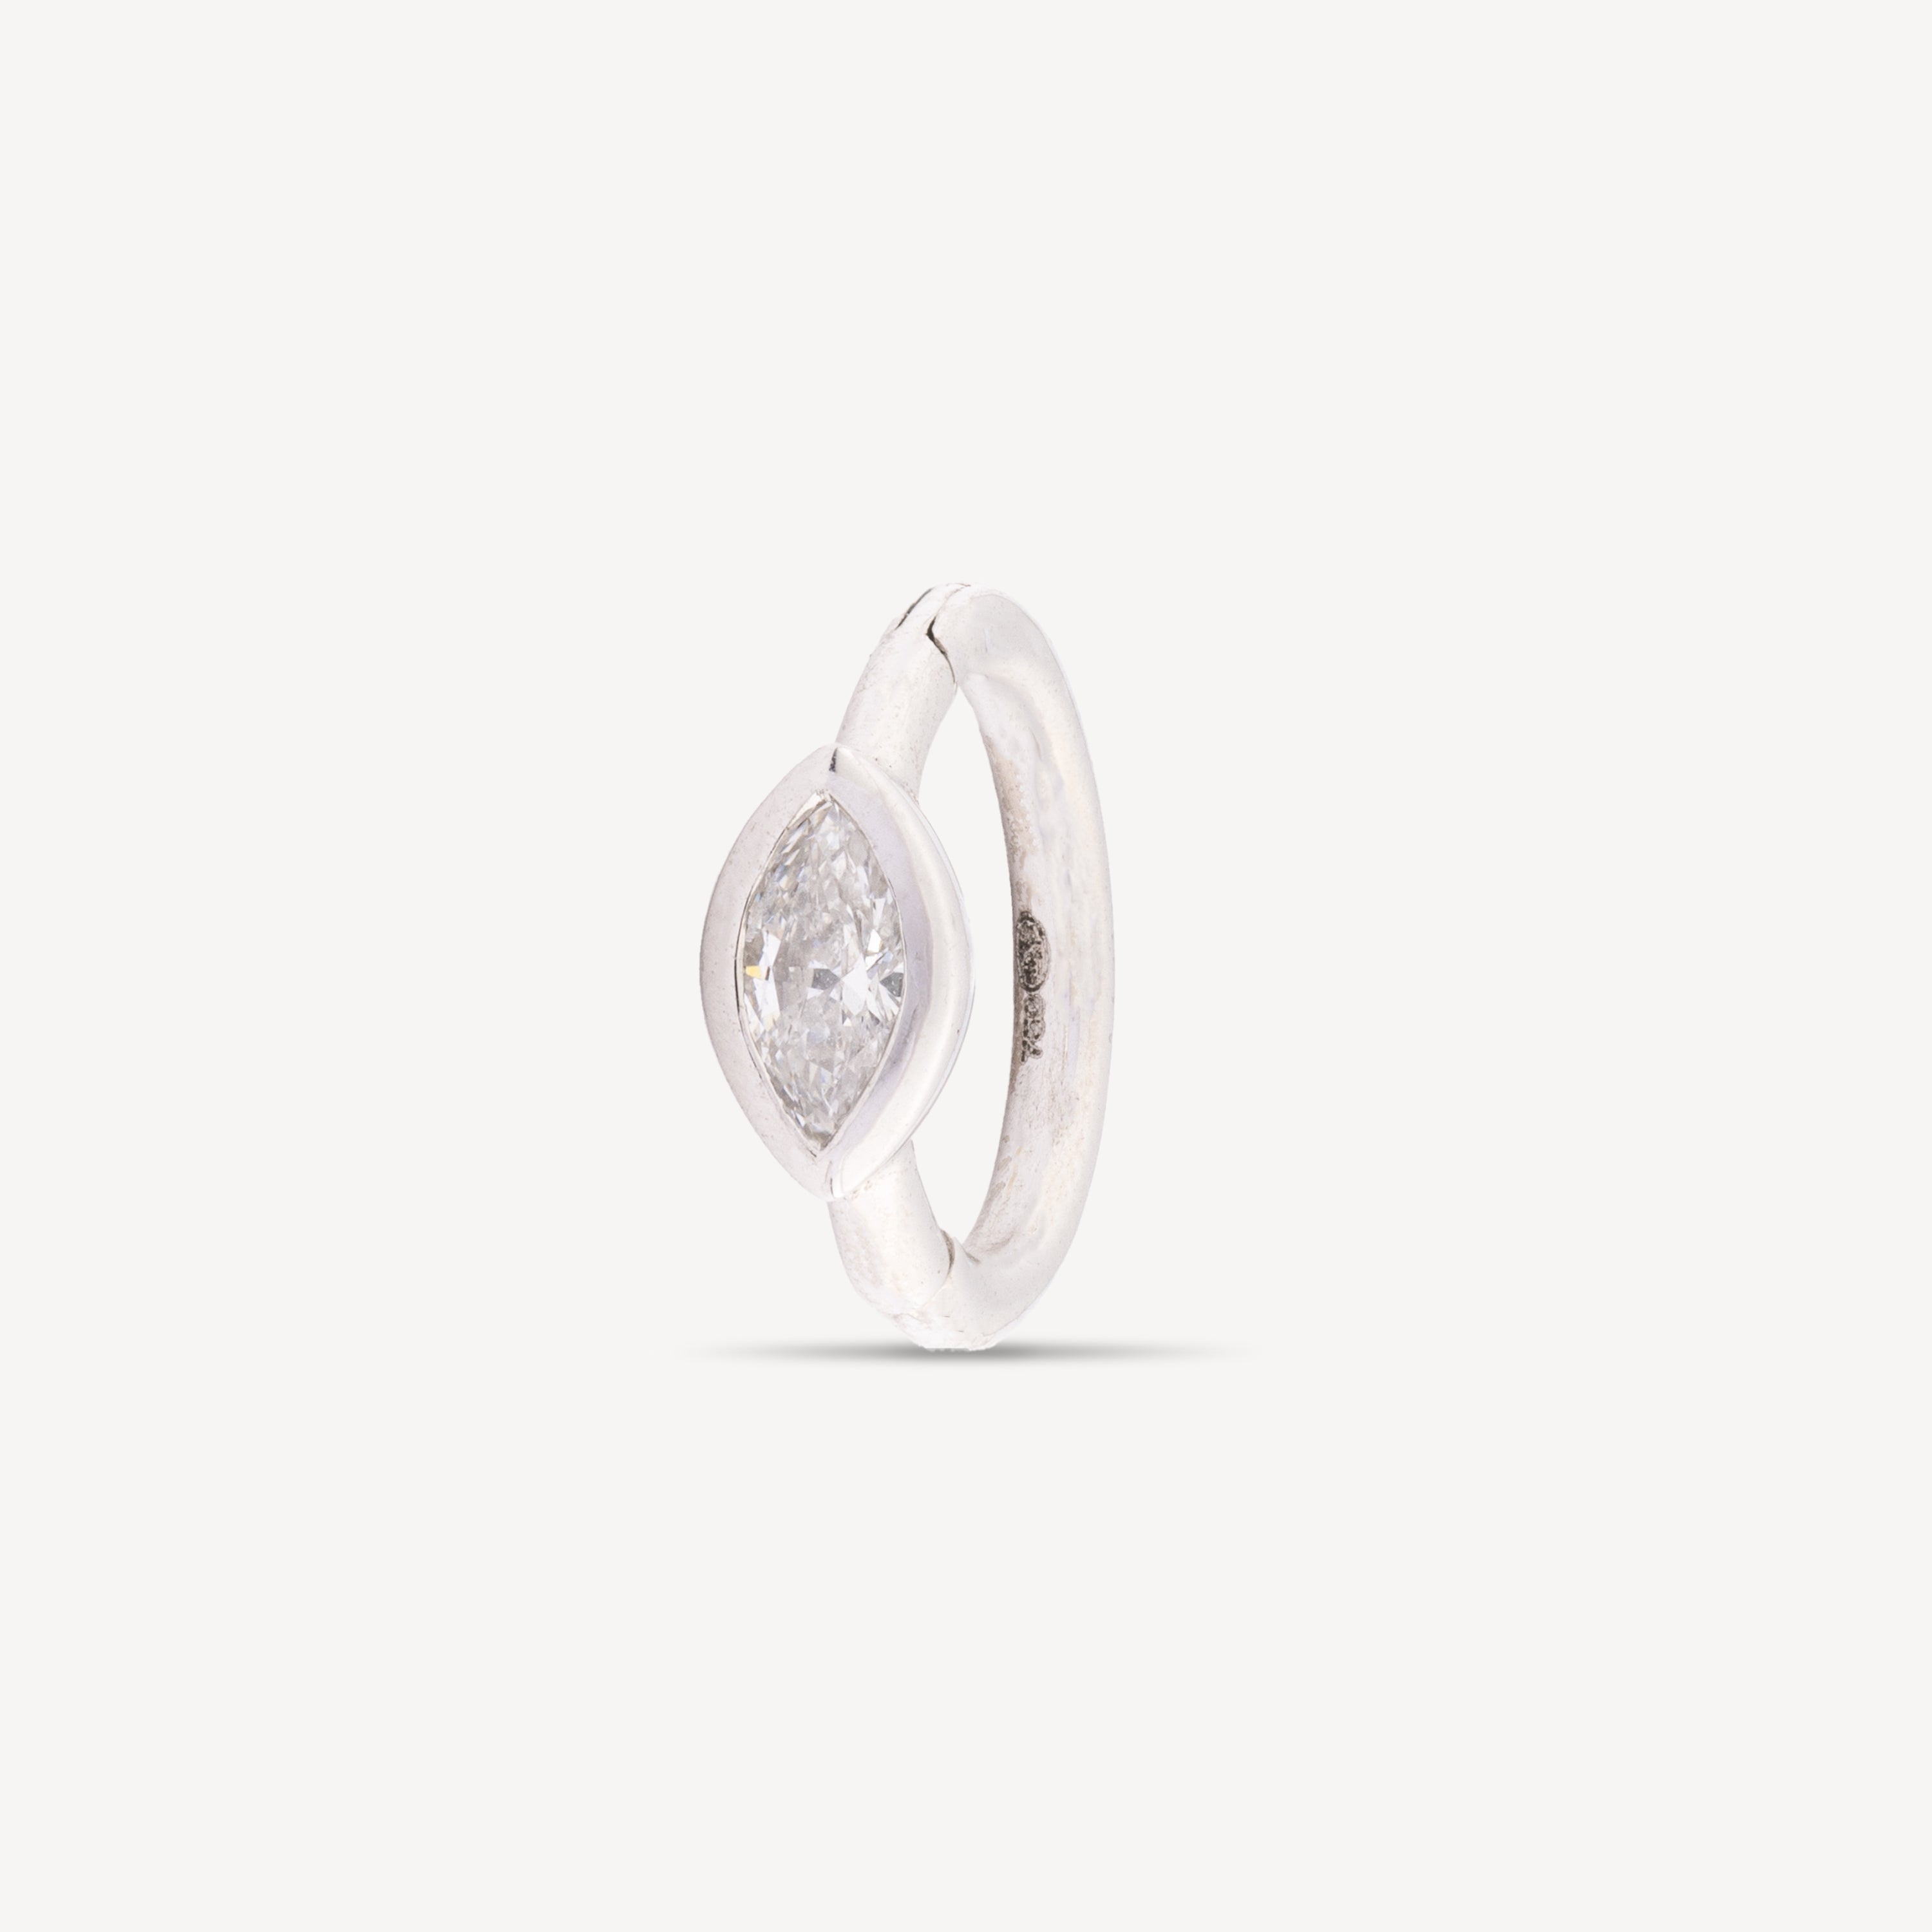 White gold 3x2mm marquise diamond 6.5mm hoop